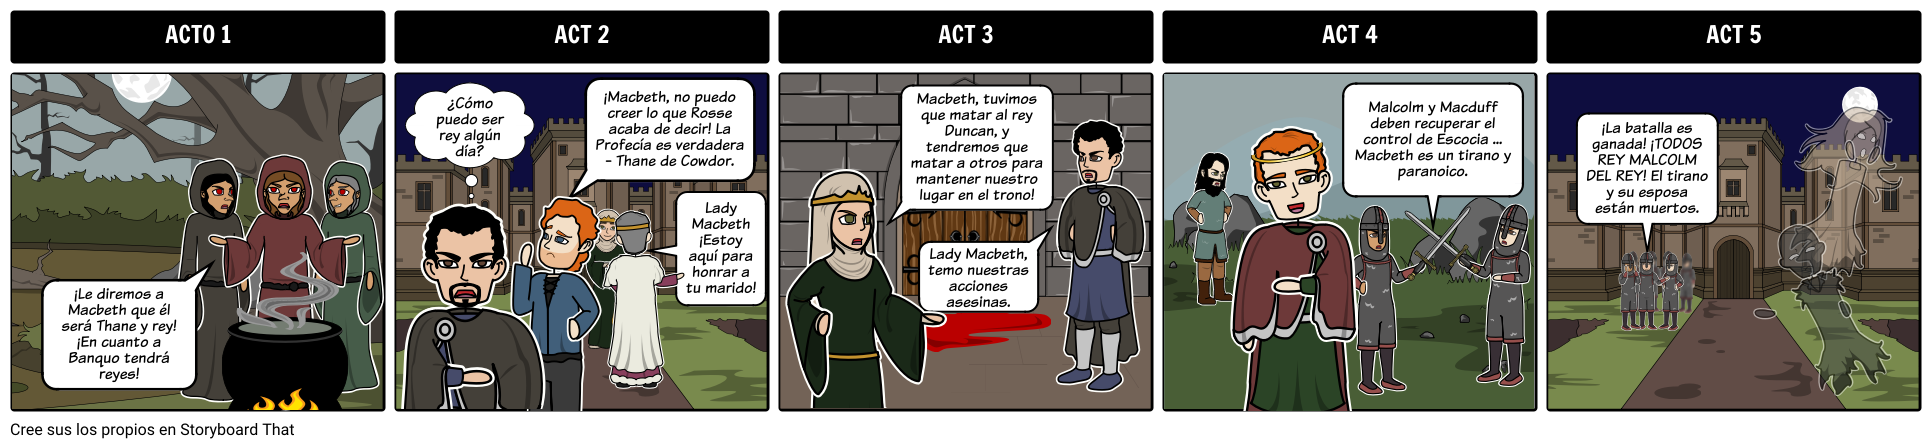 Macbeth 5 Act Story Storyboard 